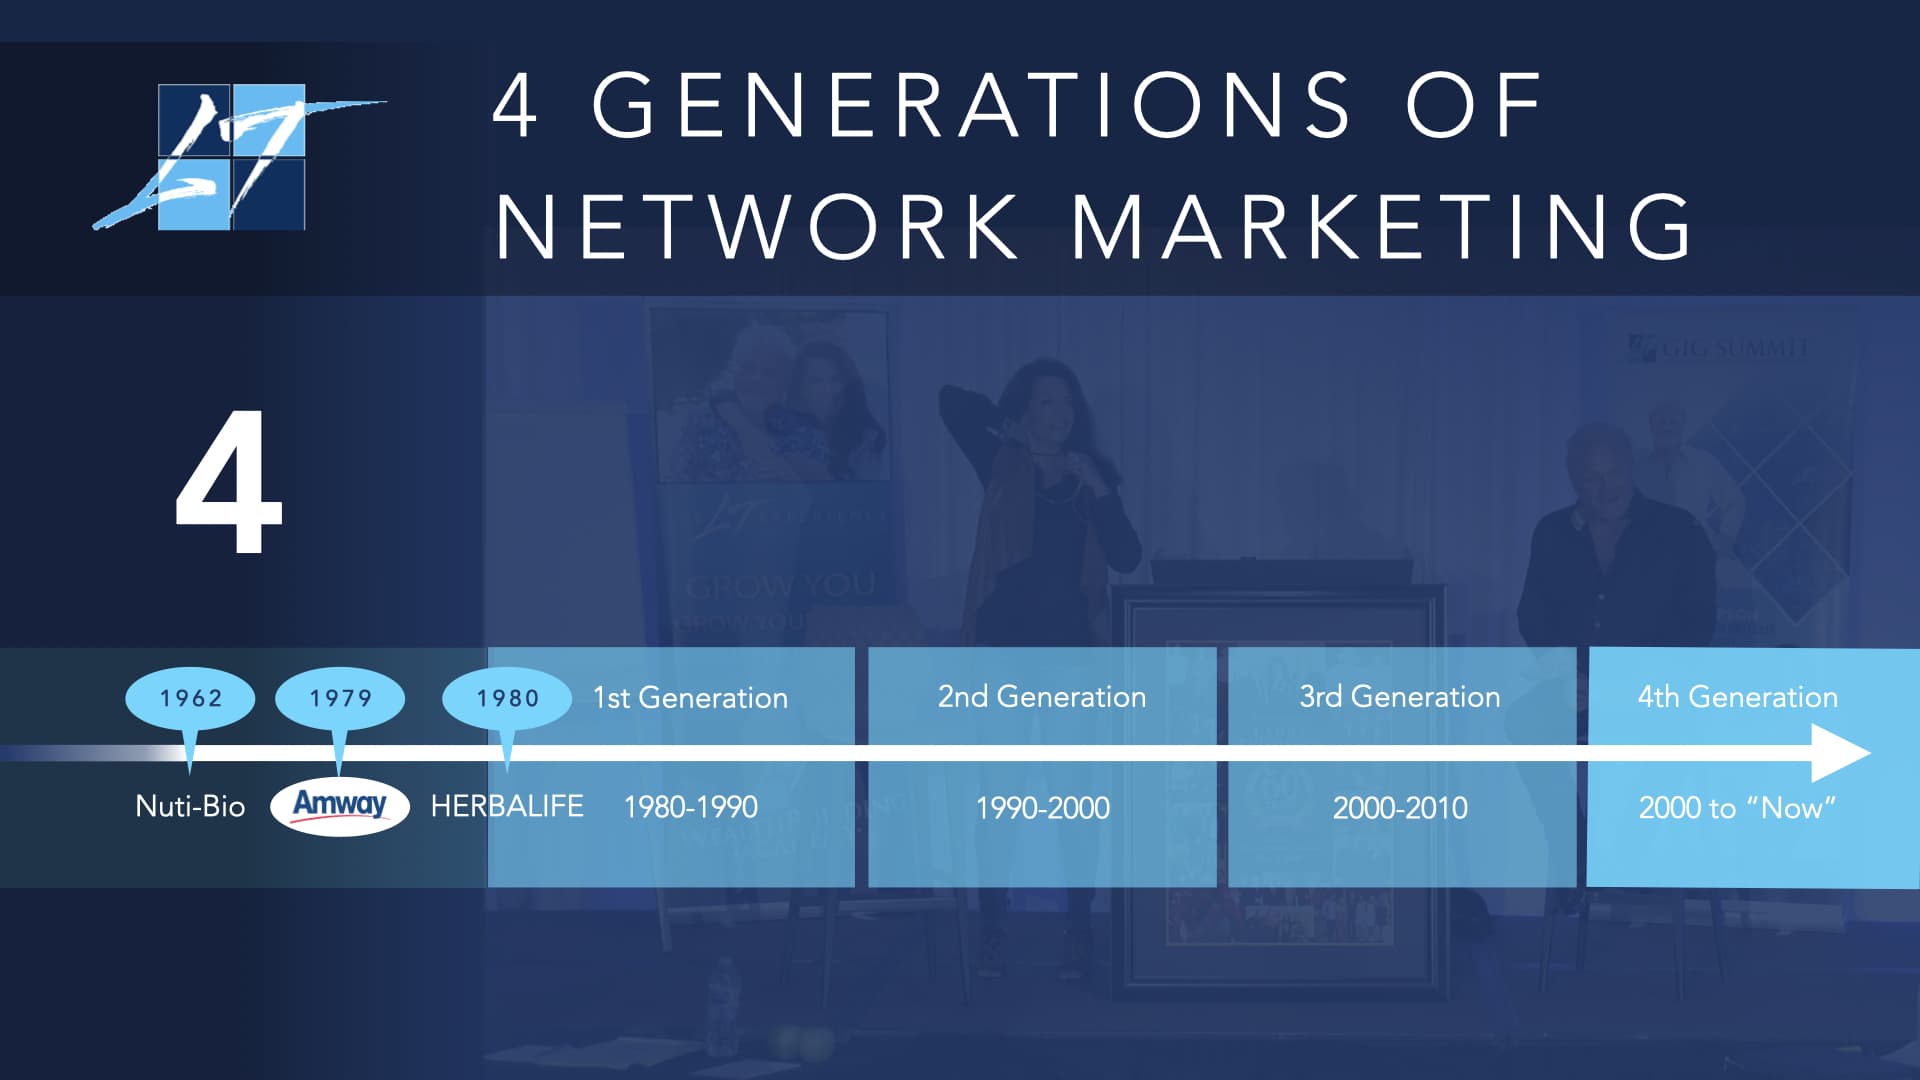 4th Generation of Network Marketing